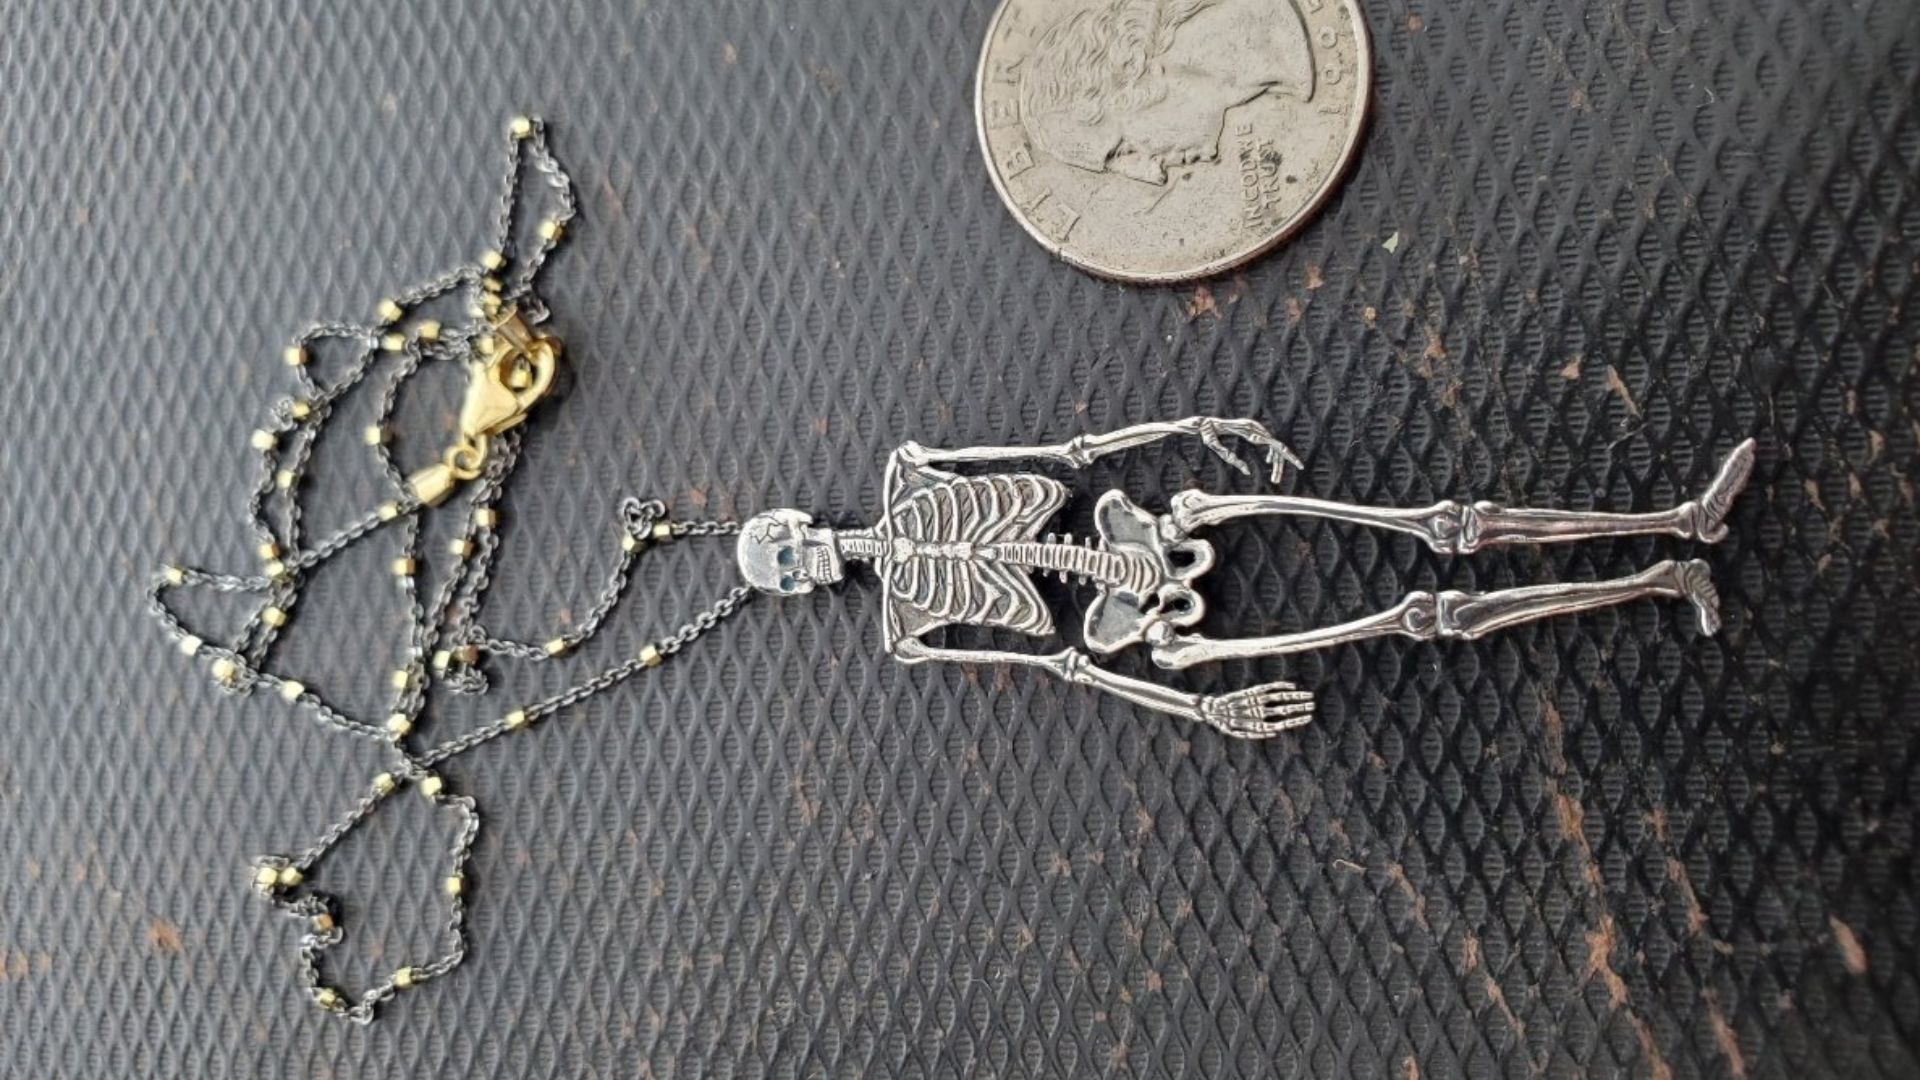 A Skeleton necklace.